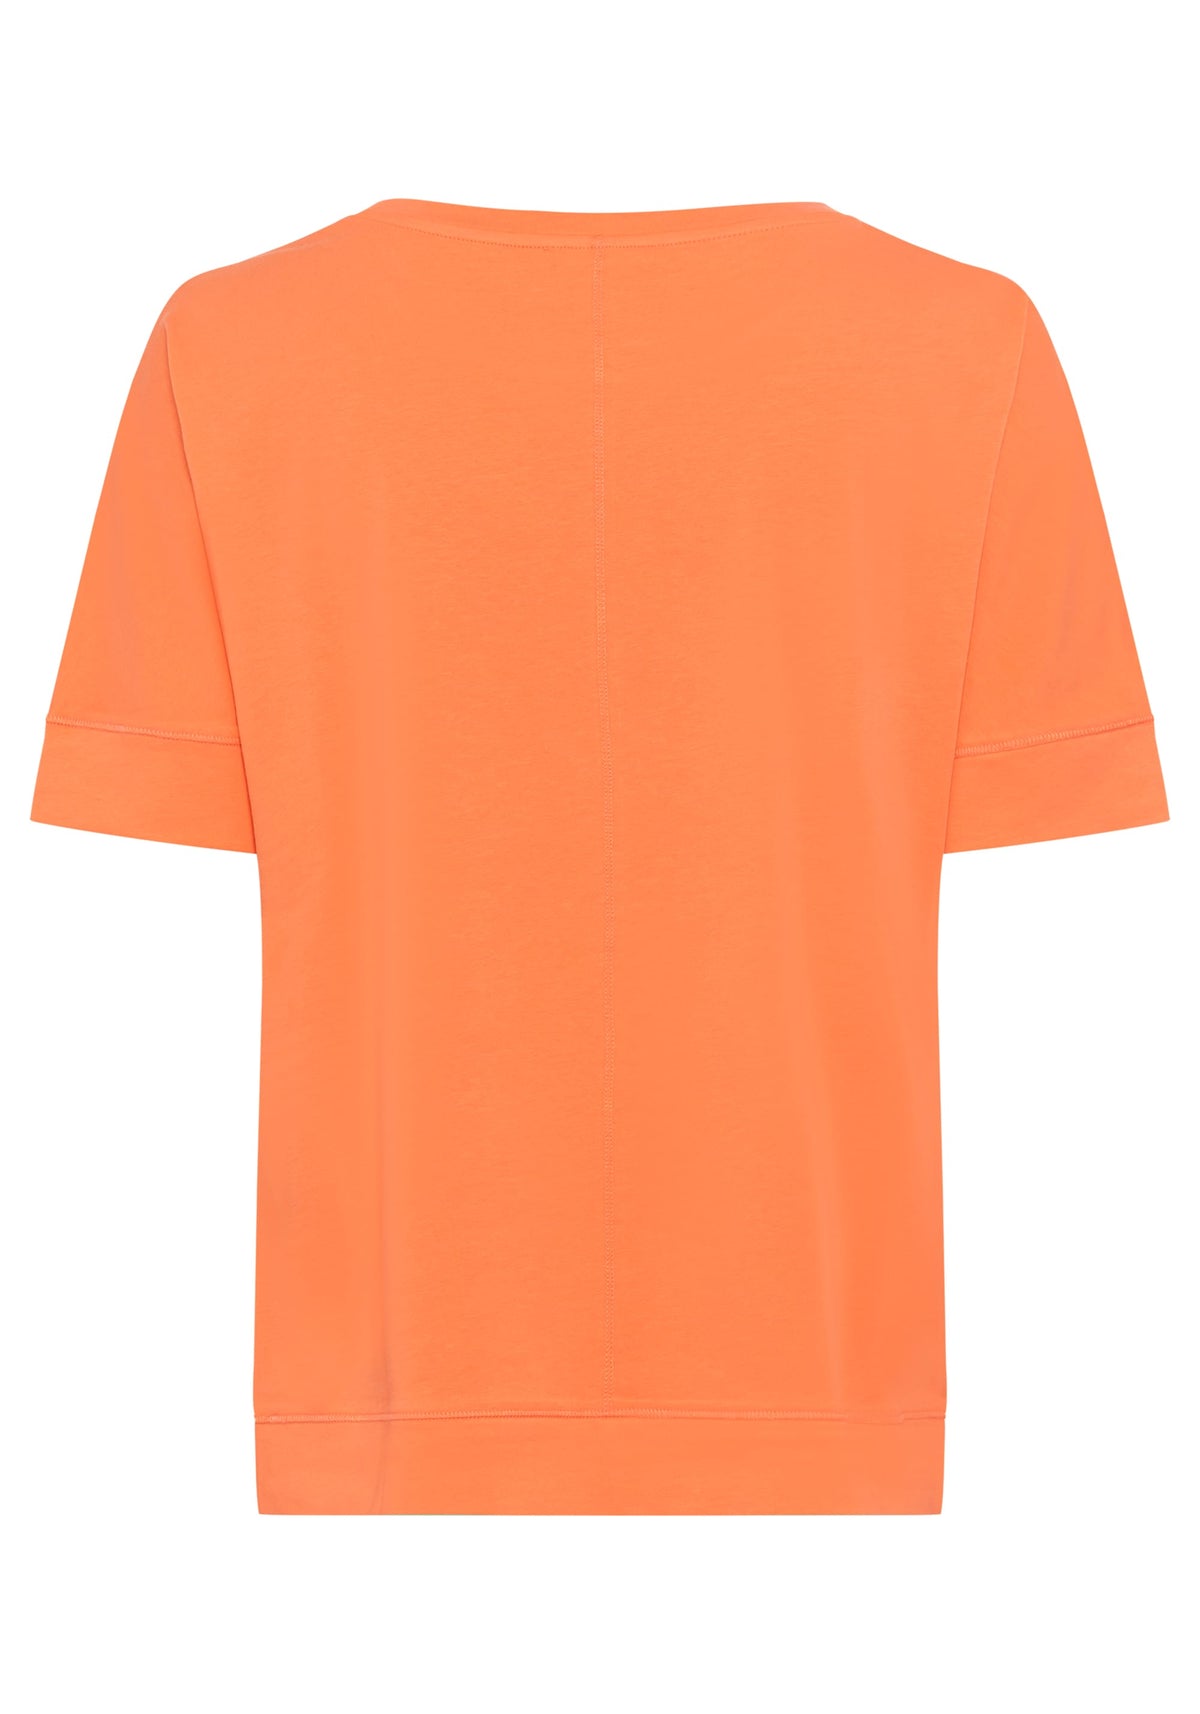 Cotton Blend Short Sleeve Round Neck T-Shirt